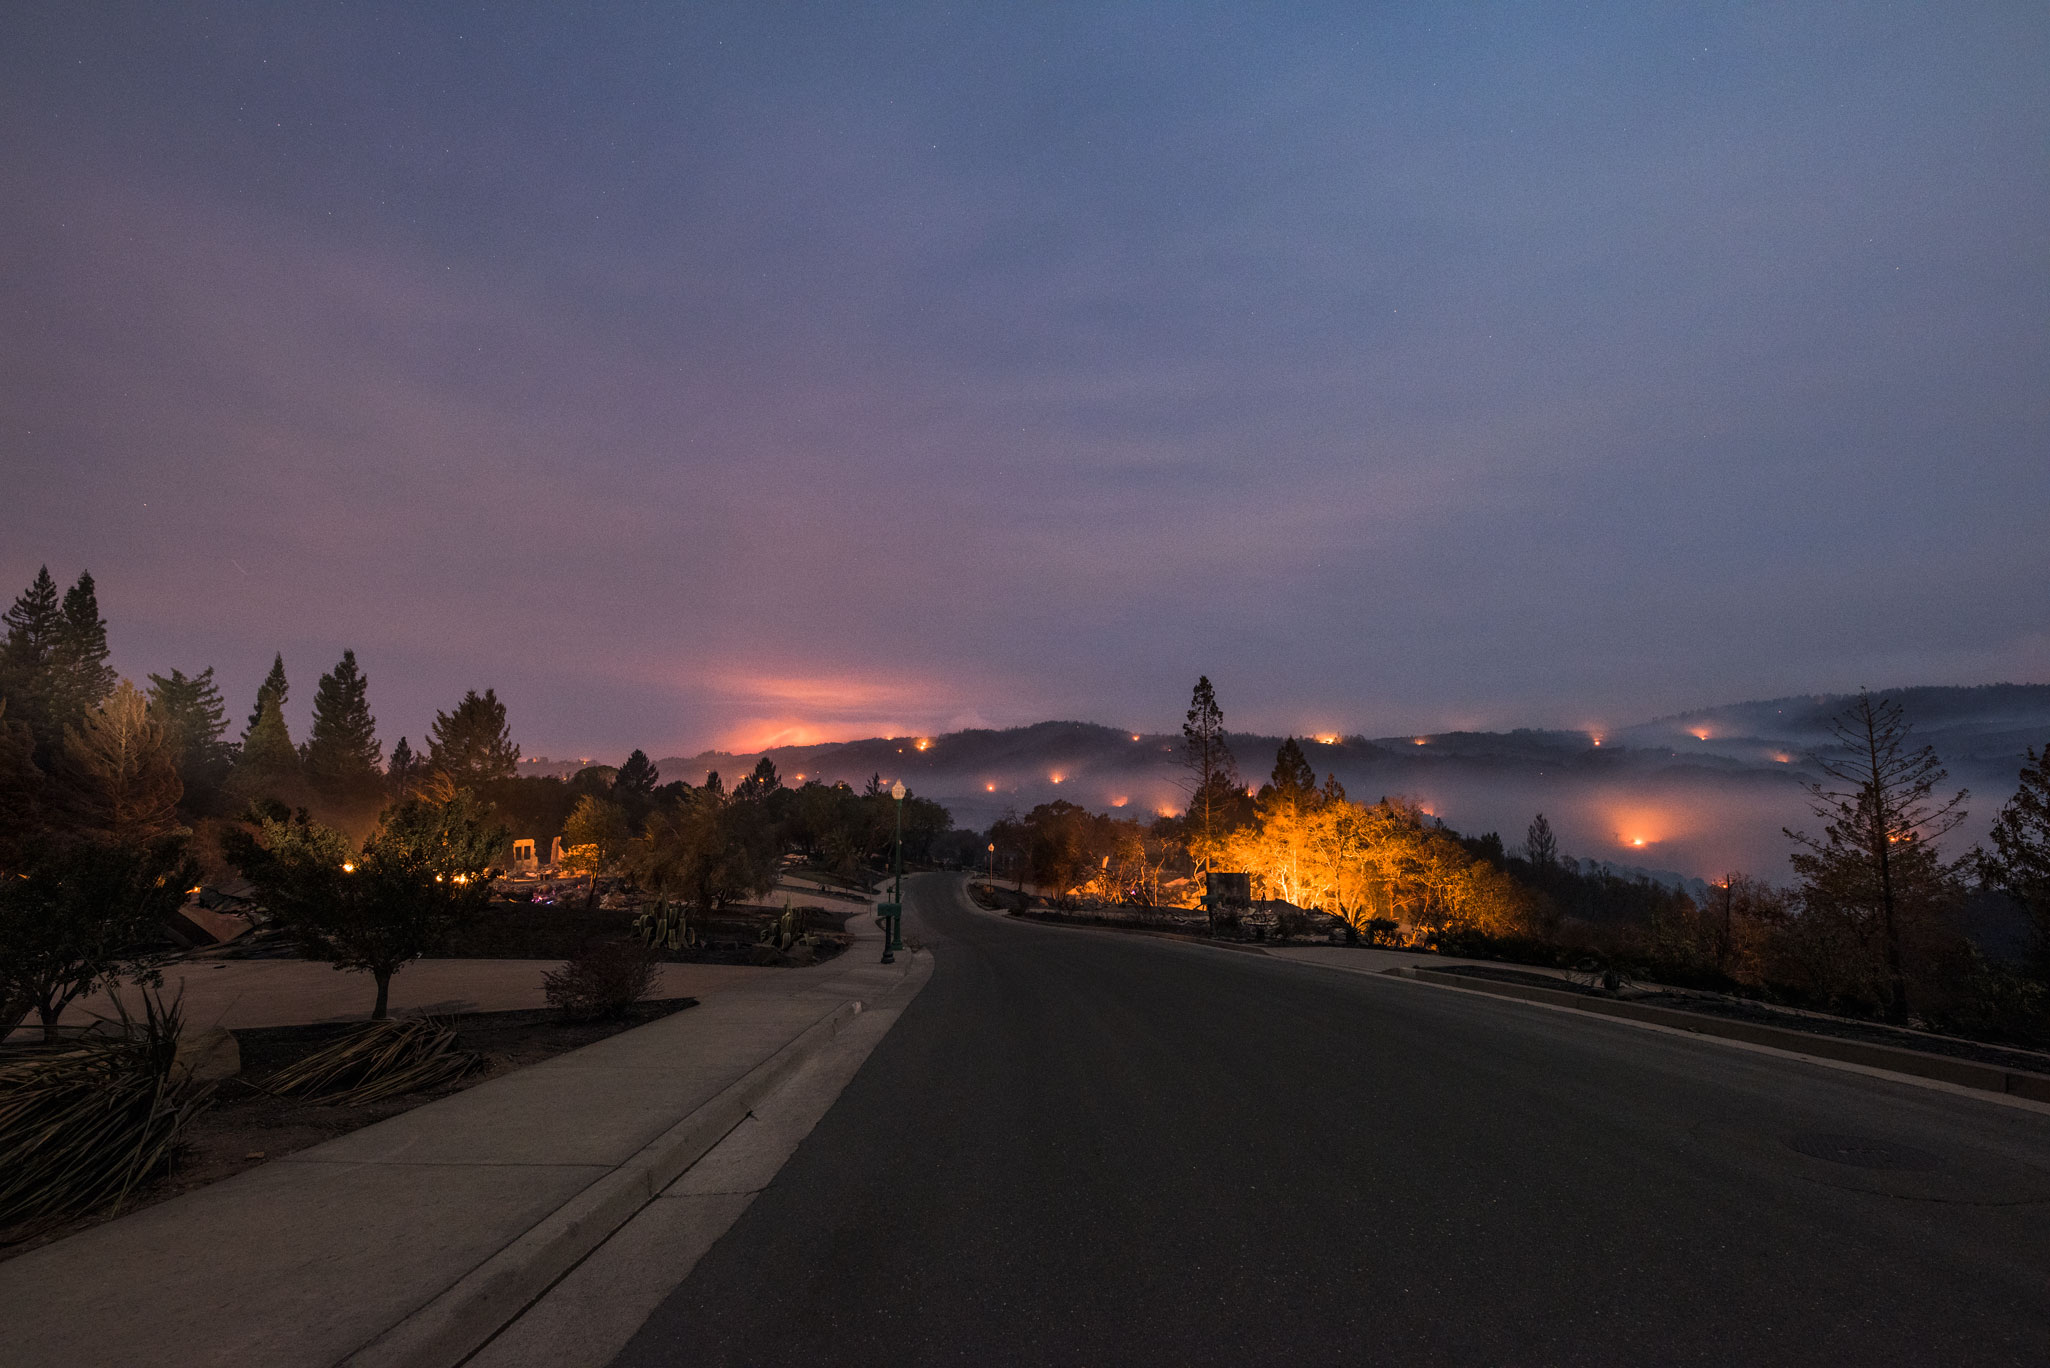 Fires burn near Santa Rosa, Calif on Oct. 10, 2017. (Jeff Frost For TIME)